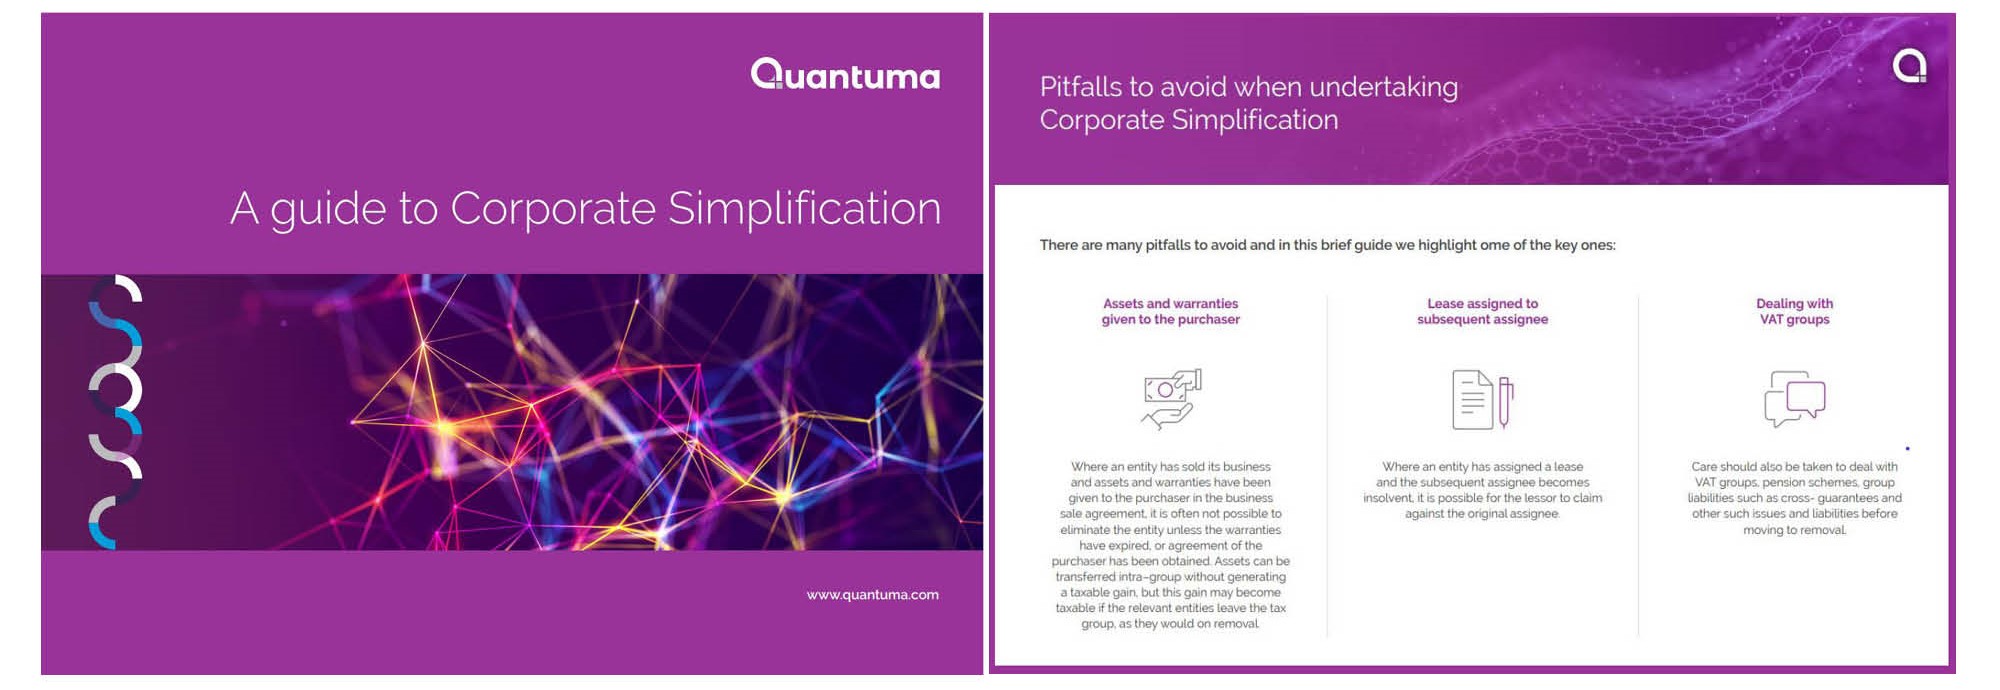 Corporate Simplification guide